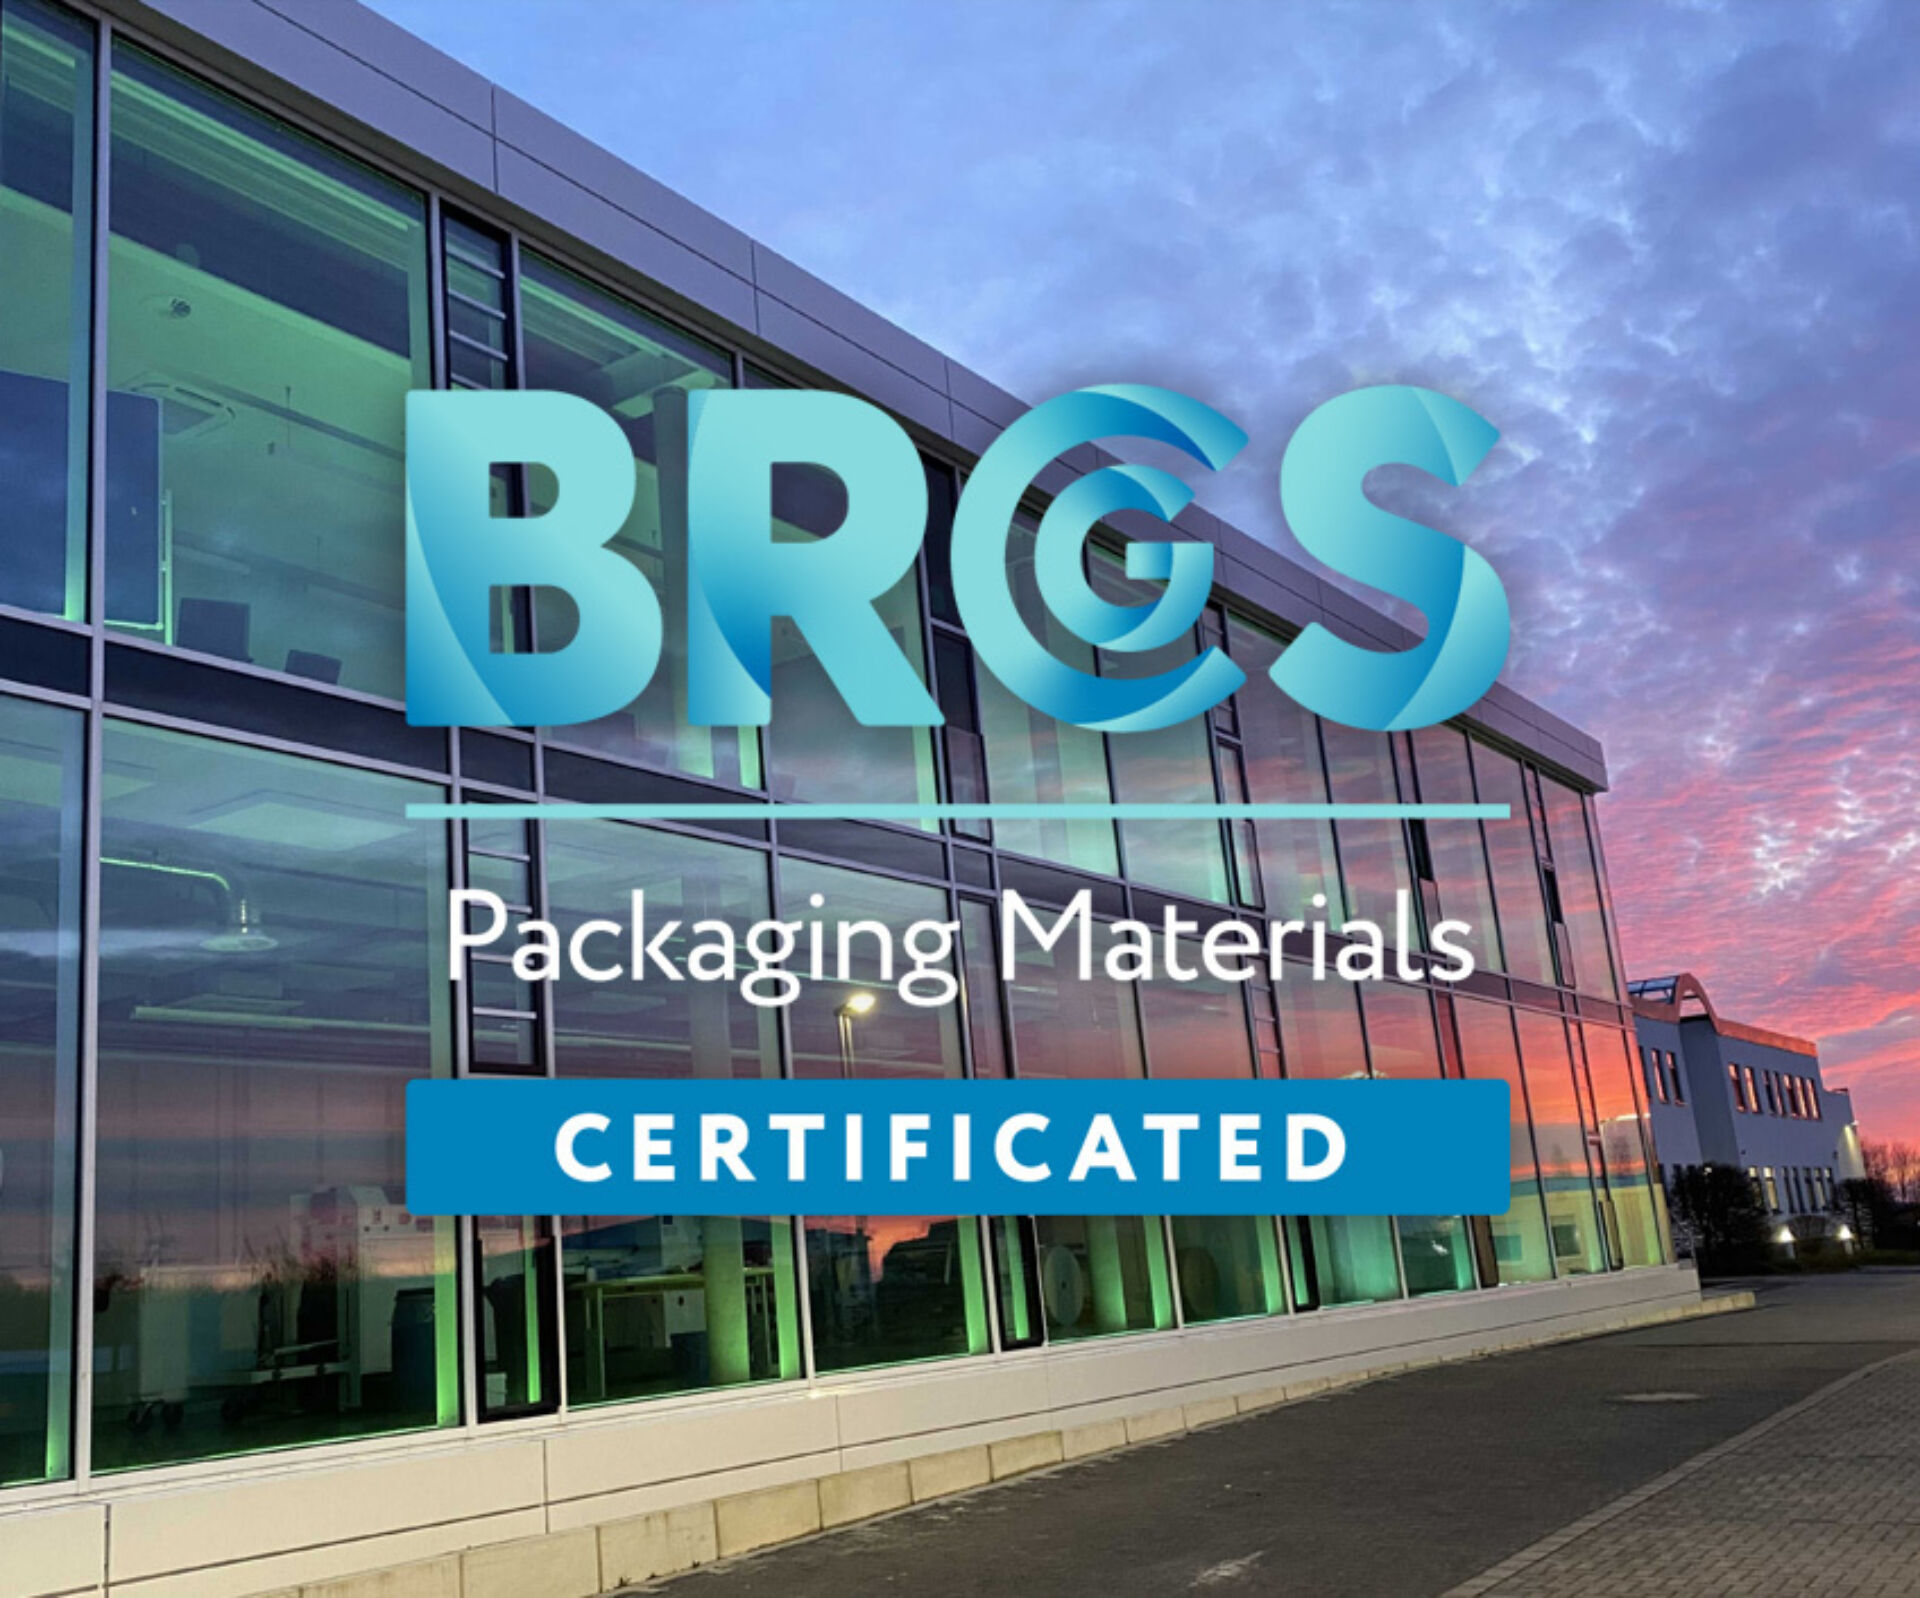 WEBER Verpackungen erneut nach BRCGS Packaging mit der Bestnote AA zertifiziert